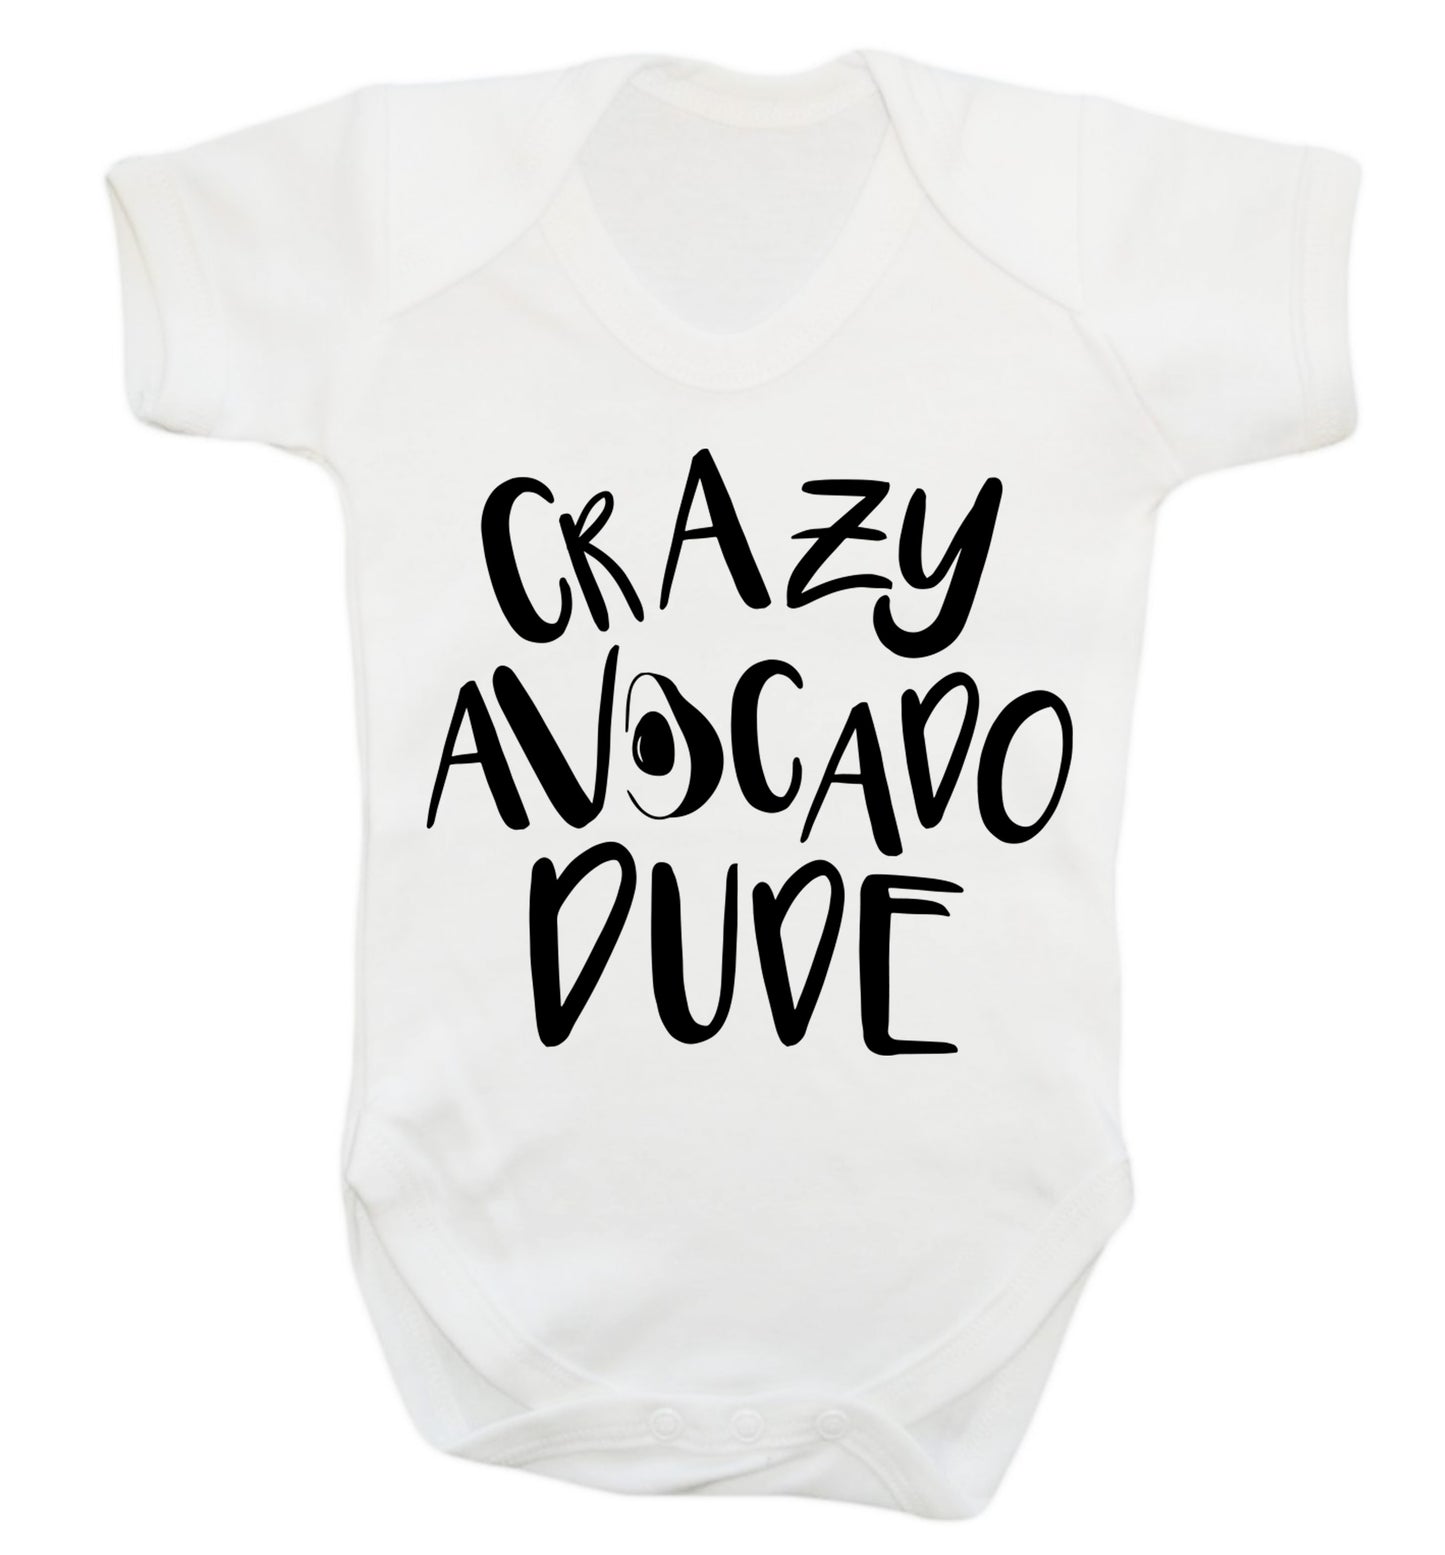 Crazy avocado dude Baby Vest white 18-24 months